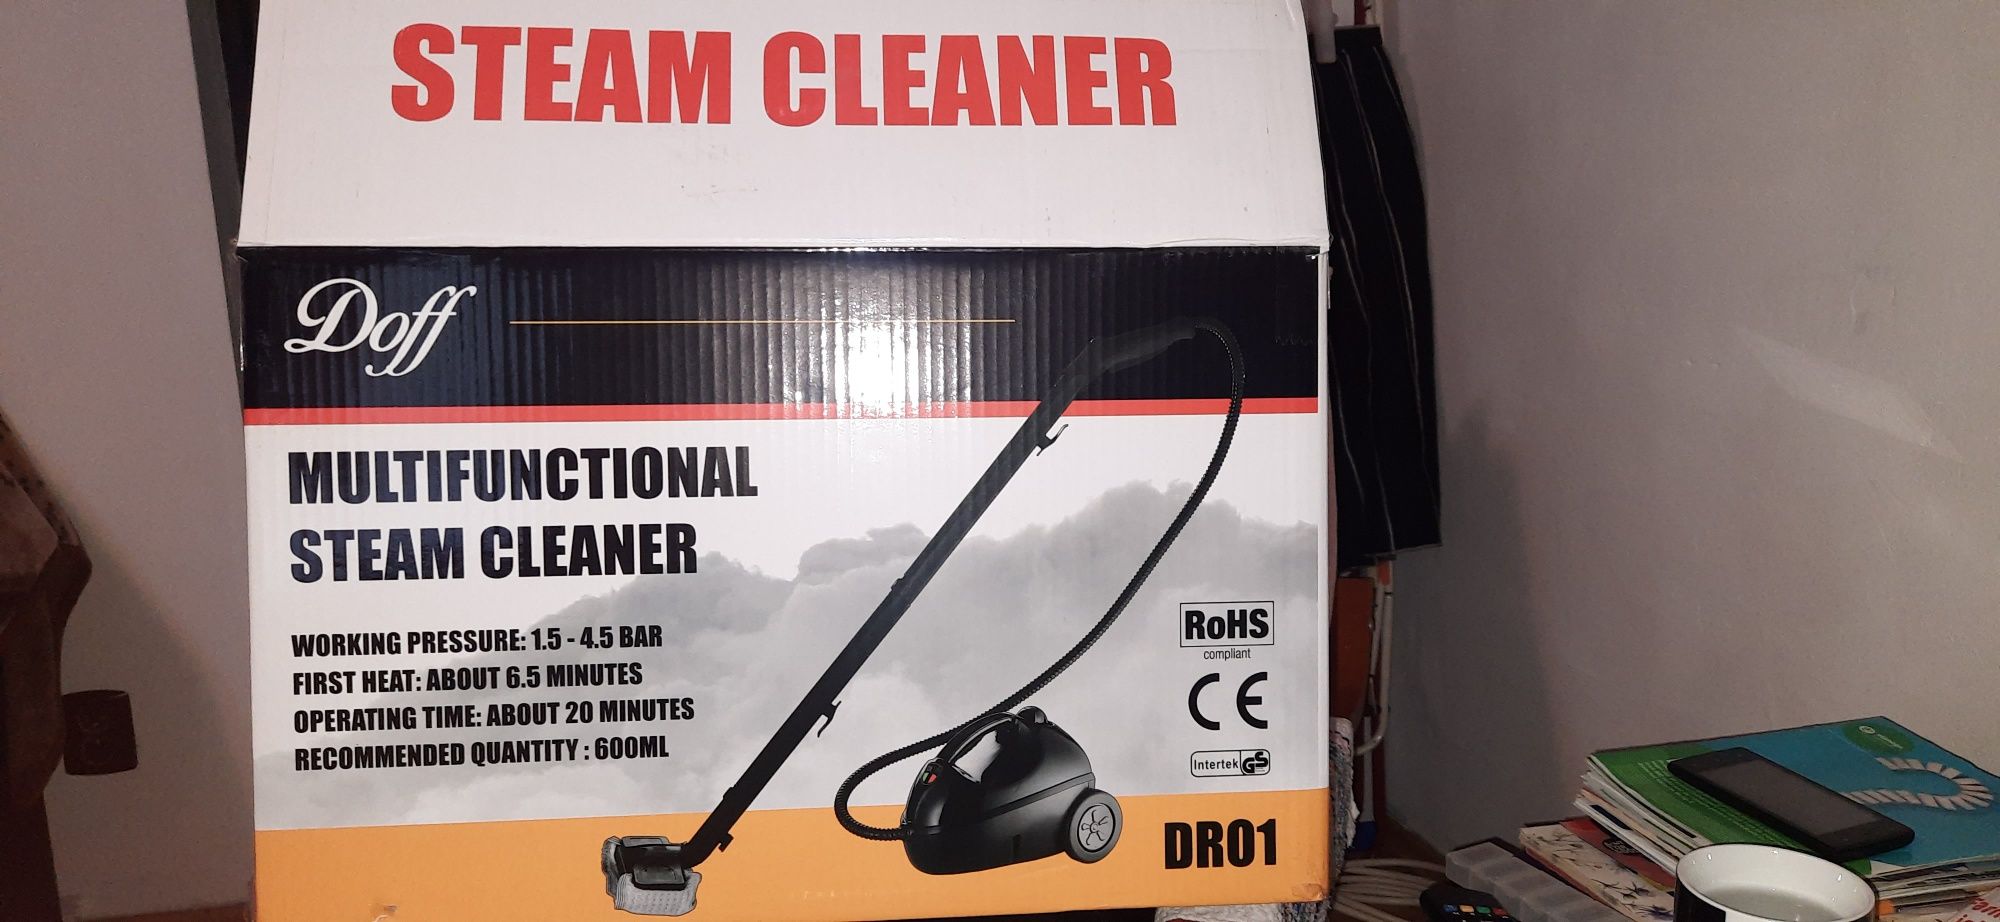 Aparat curatare cu abur, 3 in 1,nou,multifunctional steam cleaner Doff